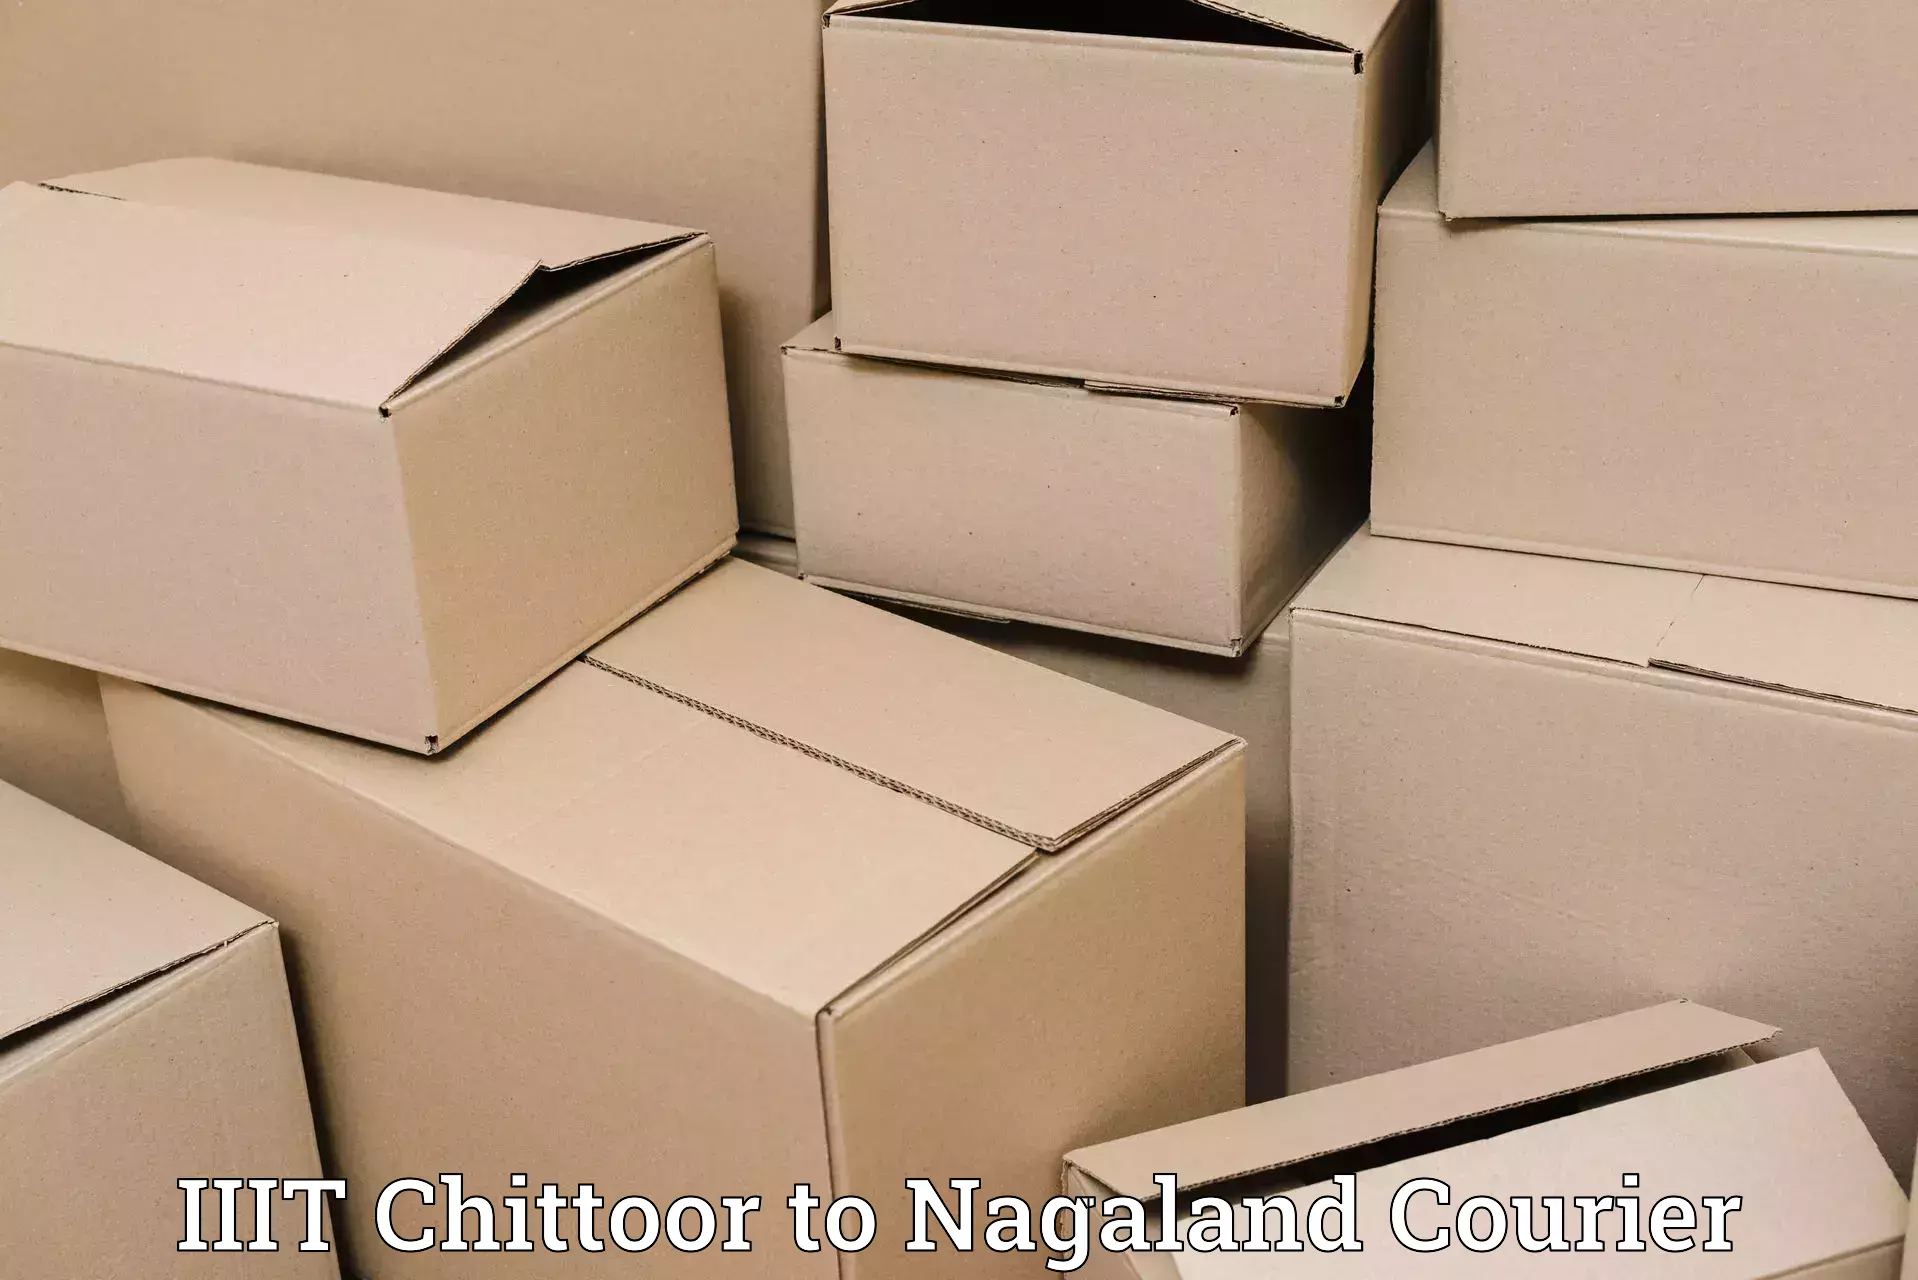 Efficient cargo handling IIIT Chittoor to Nagaland